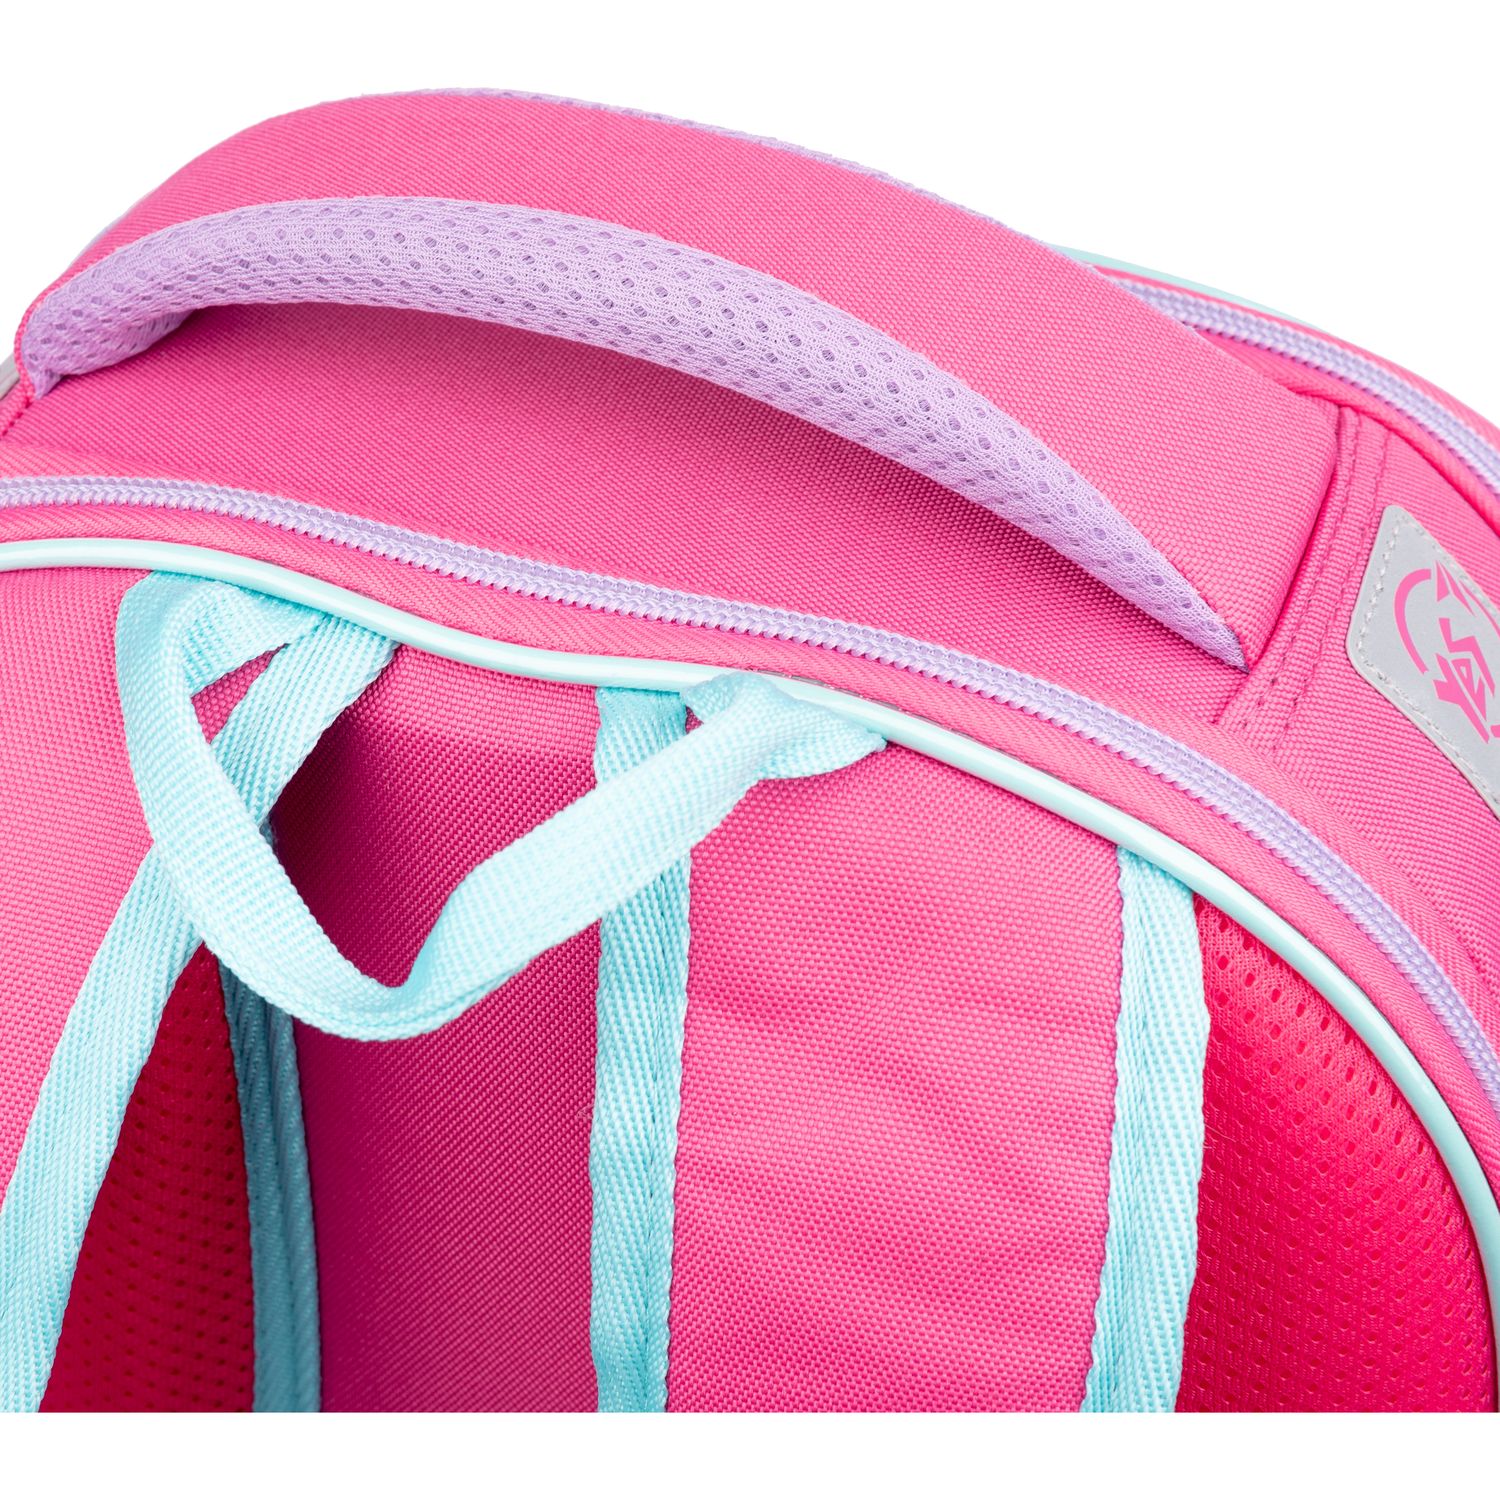 Рюкзак каркасний Yes S-78 Barbie, розовый с серым (552124) - фото 5